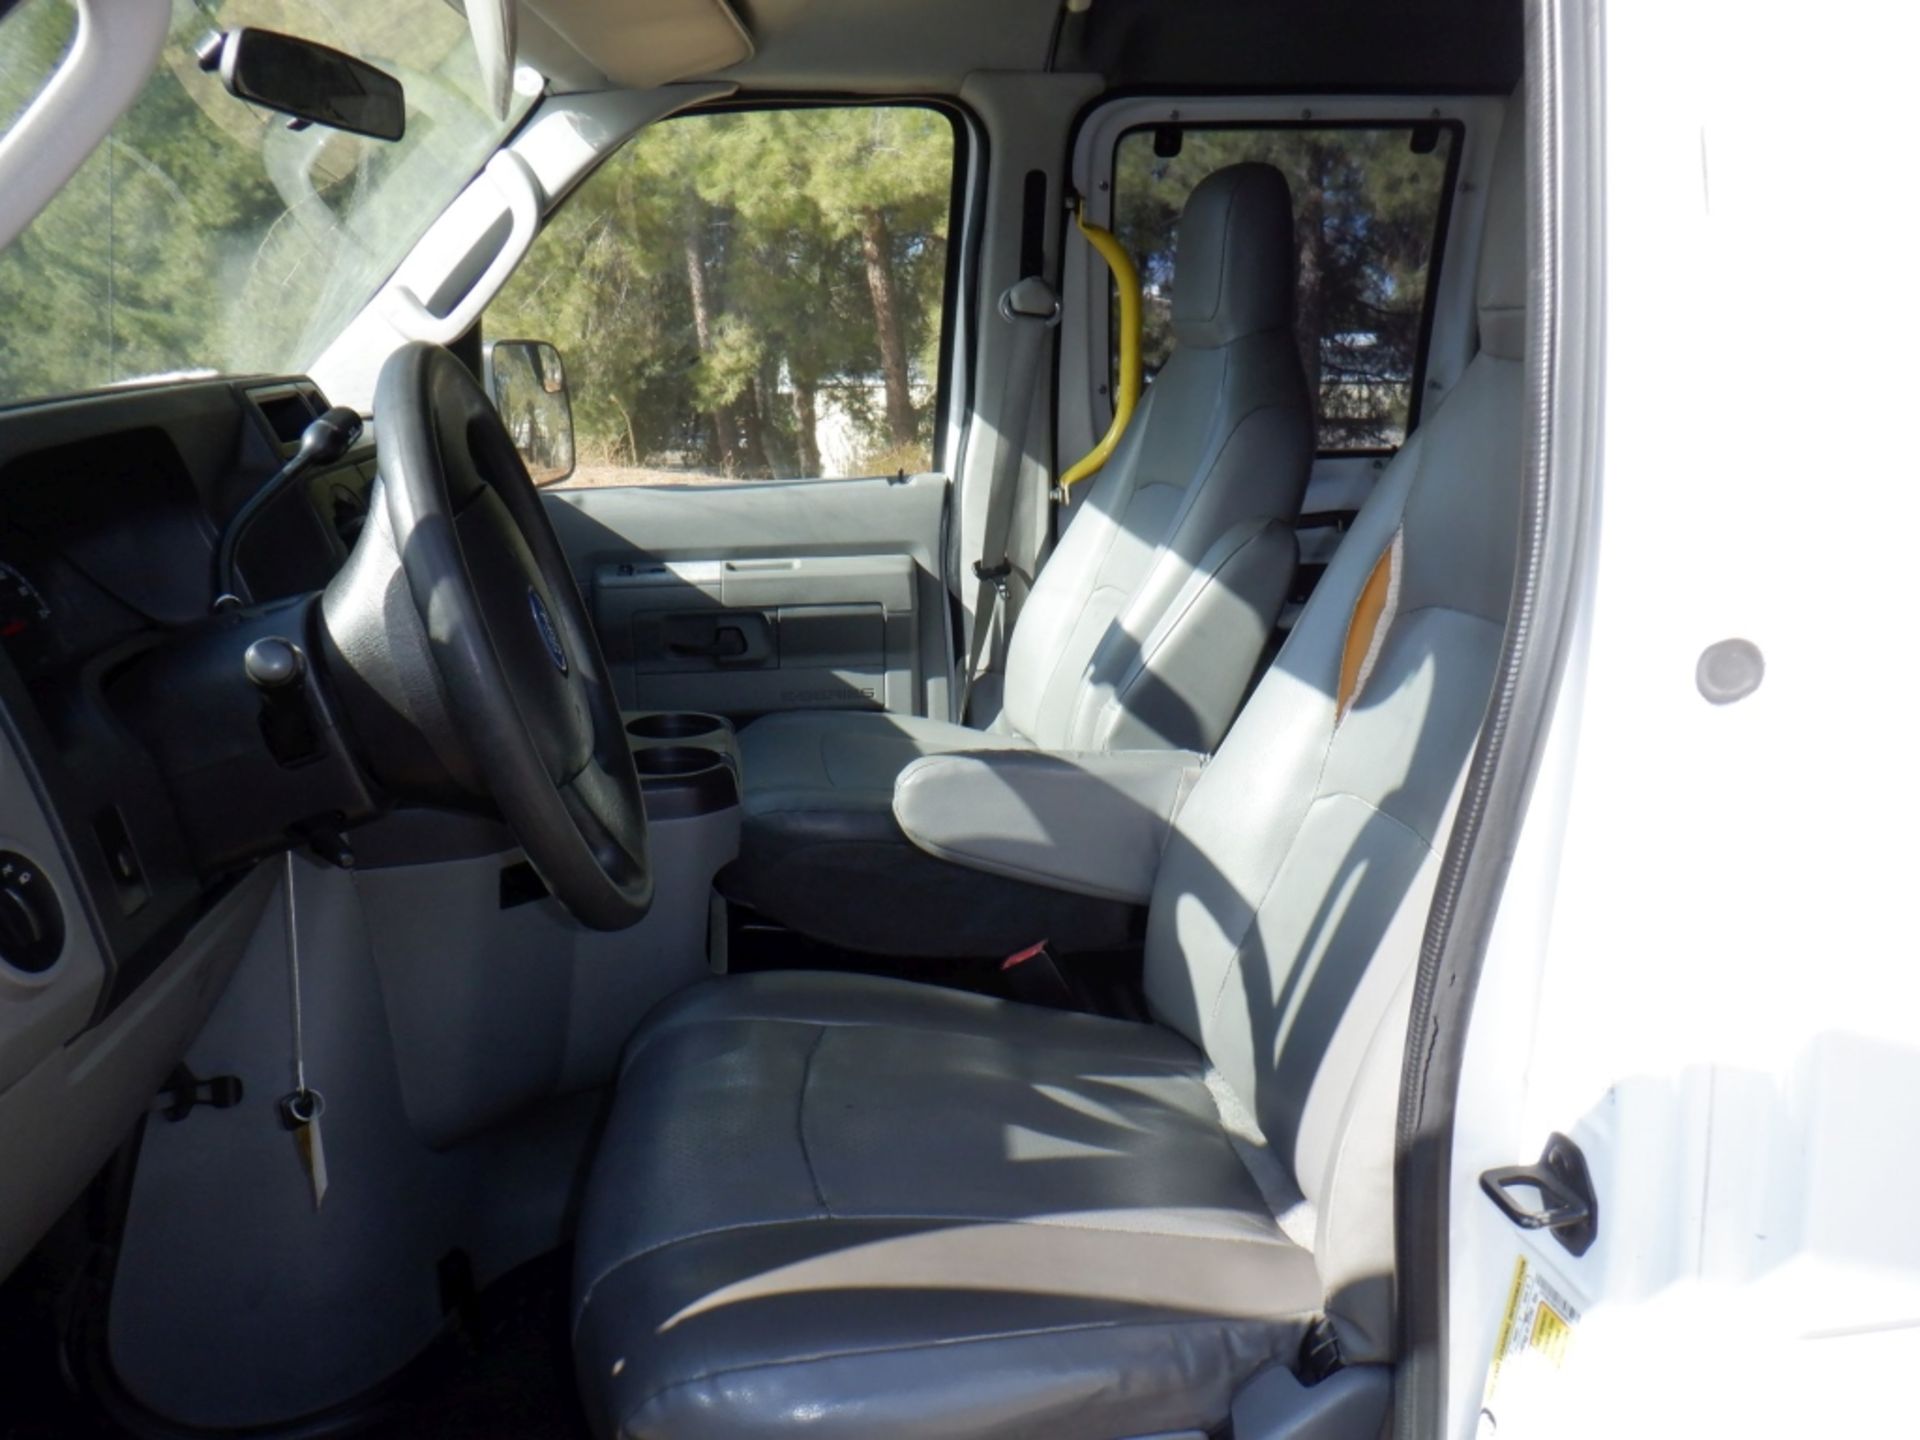 2010 Ford E150 Handicap Transport Van, - Image 9 of 25